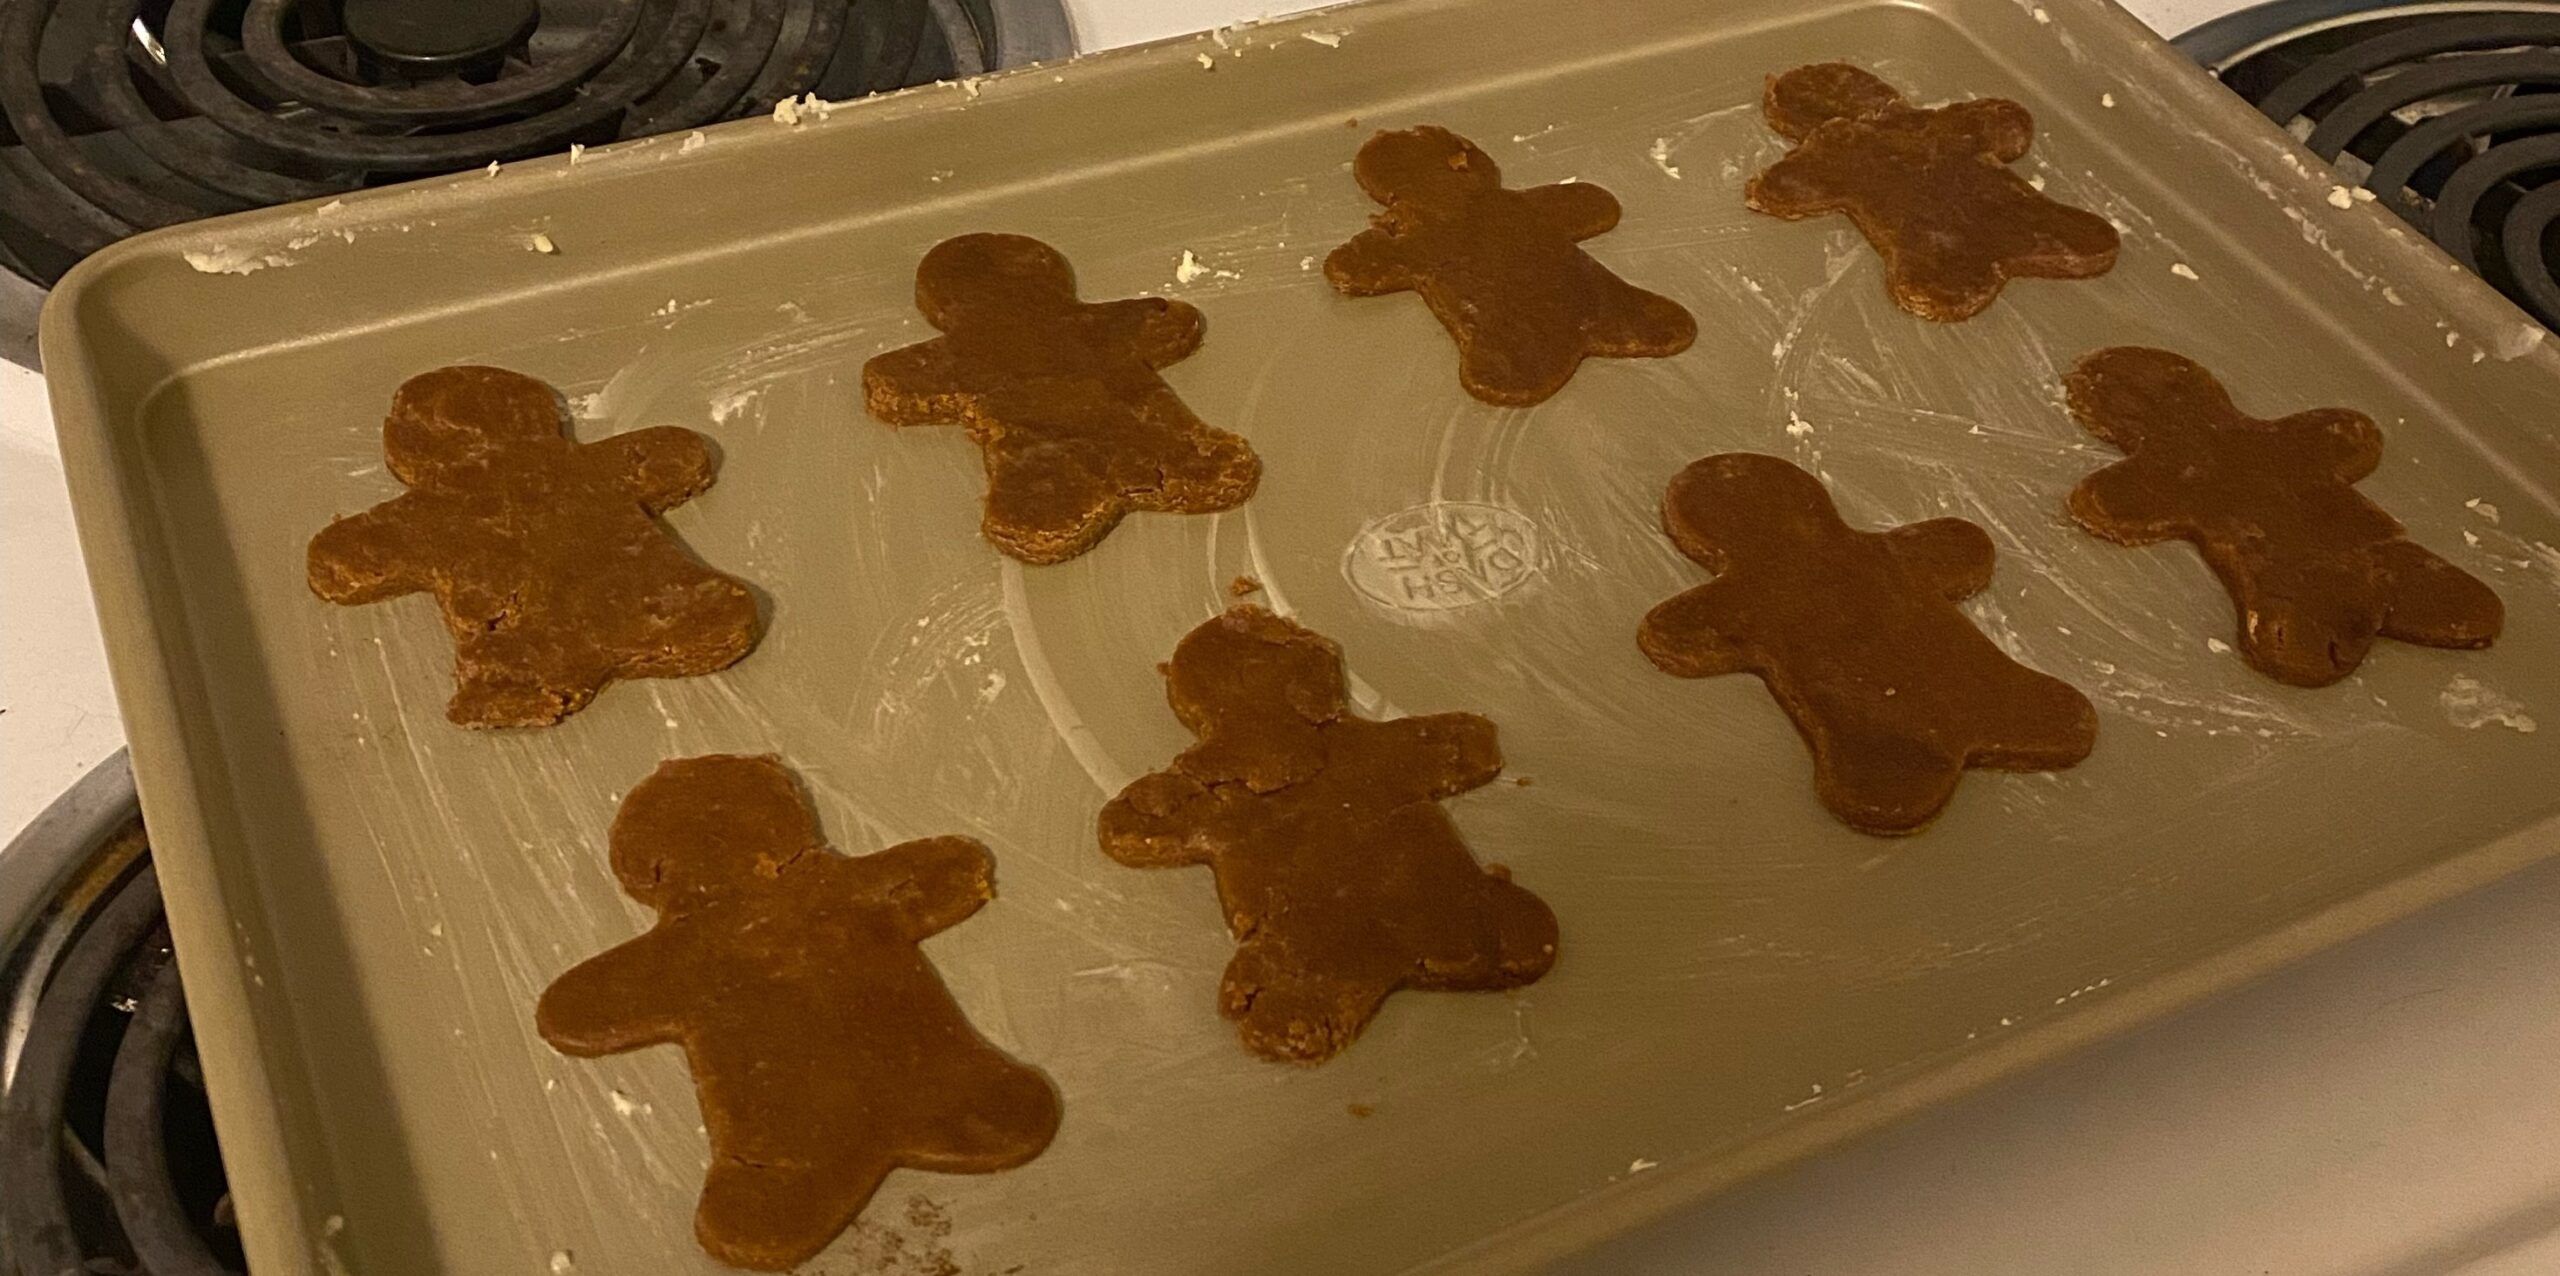 gingerbread men cookies unbaked